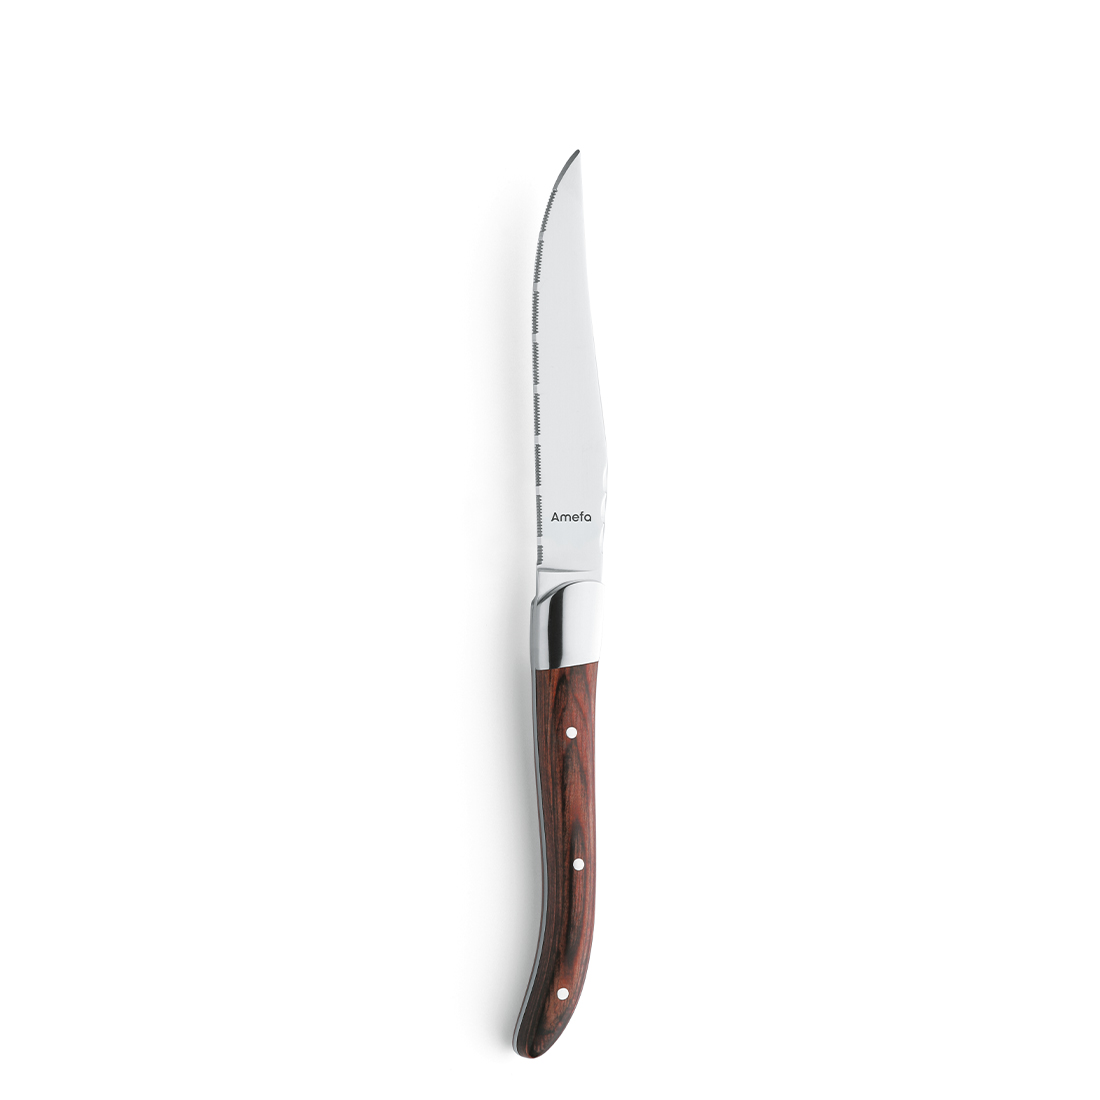 Steakmesser Set 4-teilig Holz ROYAL STEAK Amefa Premiere personalisiert Messer